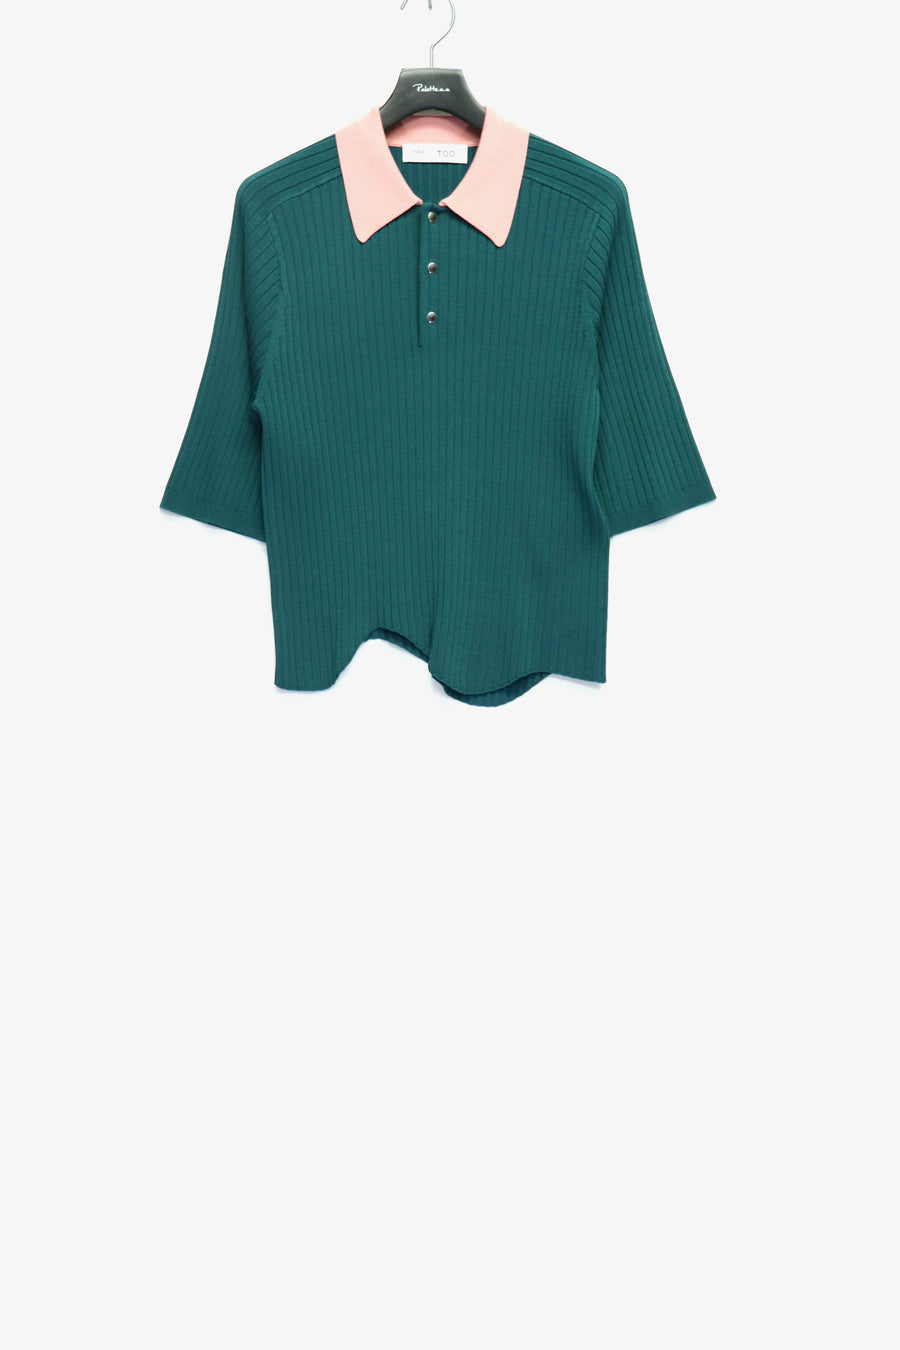 TOGA VIRILIS(トーガ ビリリース)のWave knit polo shirtの通販 ...